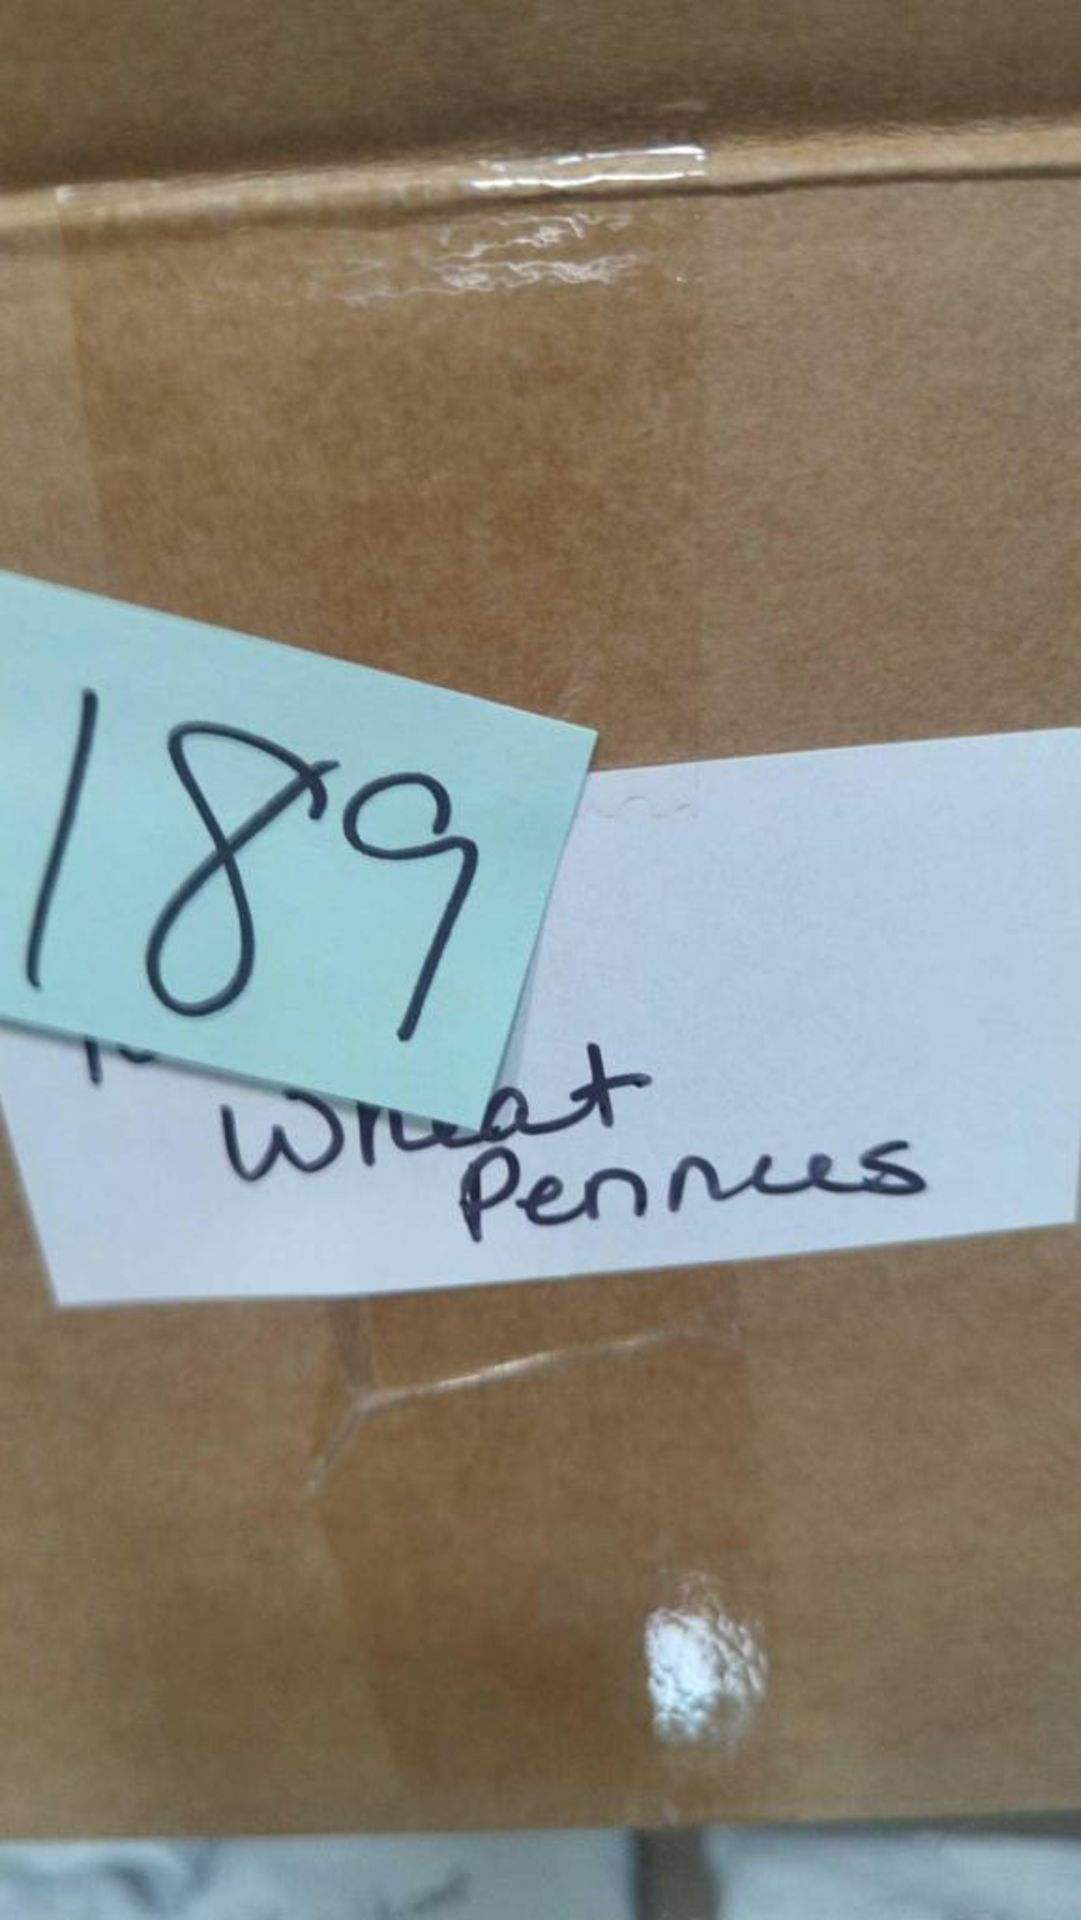 10lbs of Wheat Pennies